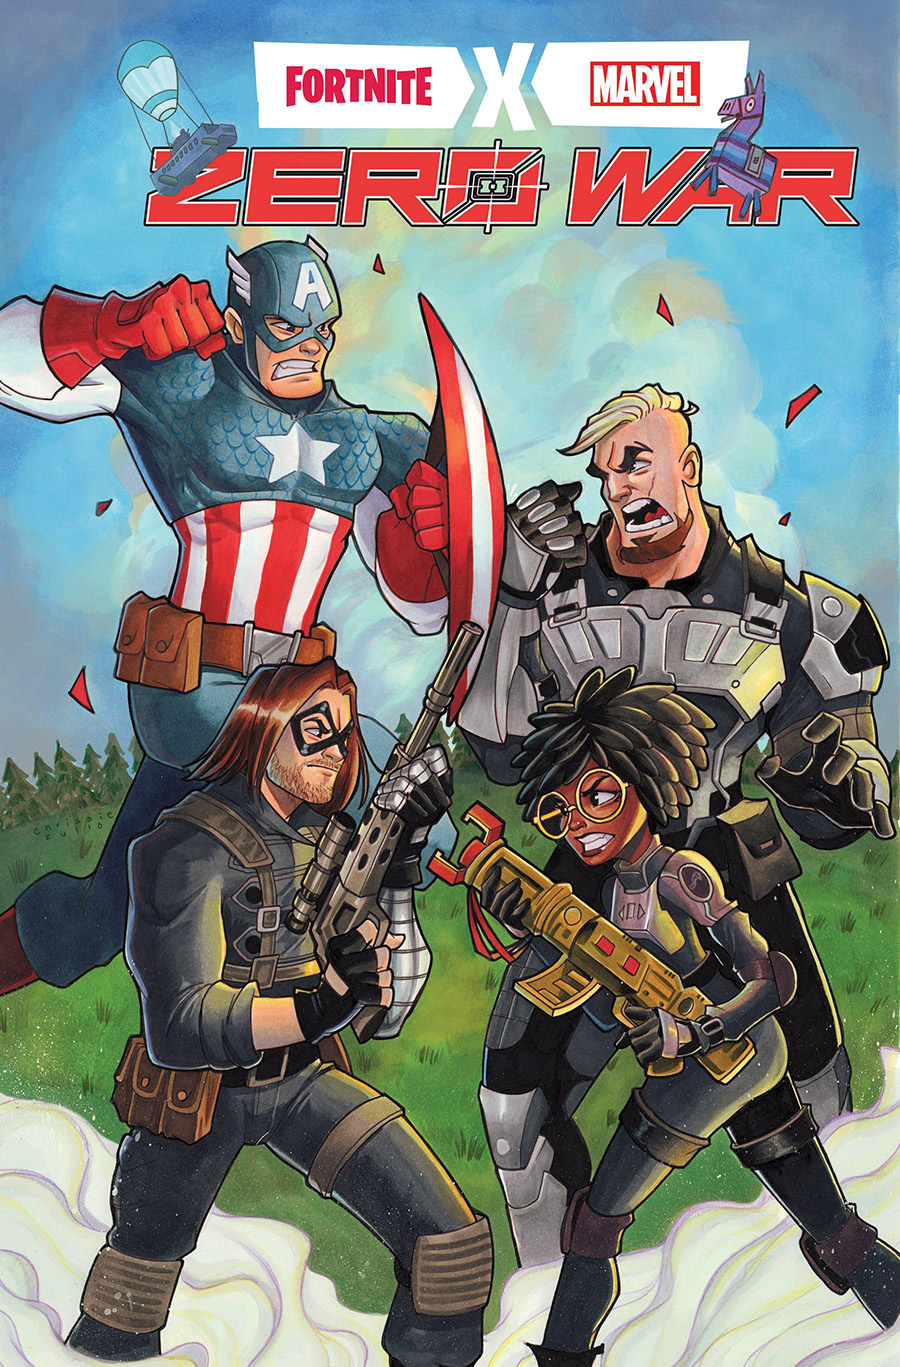 Fortnite x Marvel Zero War #2 Cover D Variant Chrissie Zullo Cover